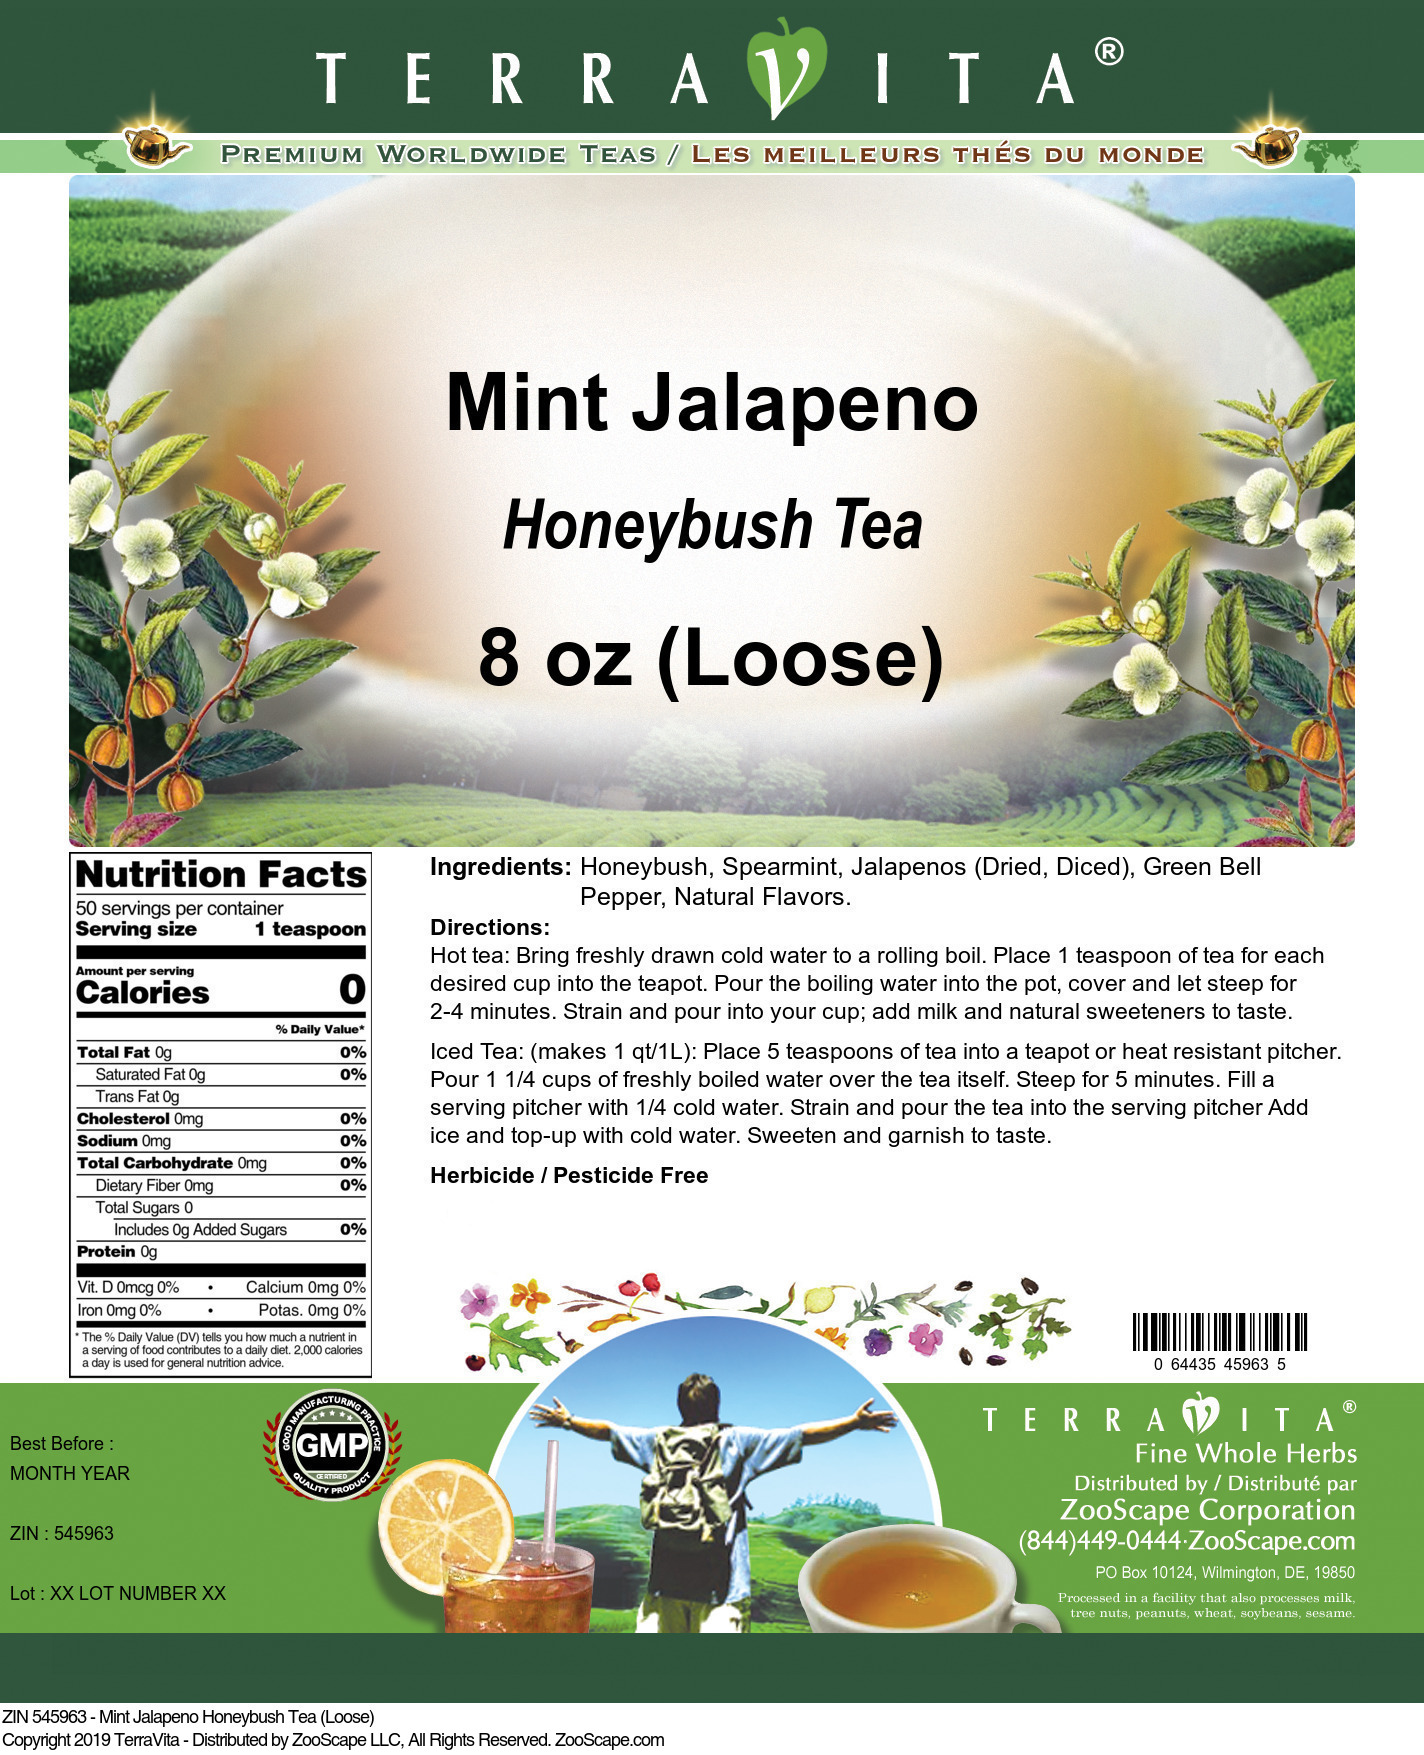 Mint Jalapeno Honeybush Tea (Loose) - Label